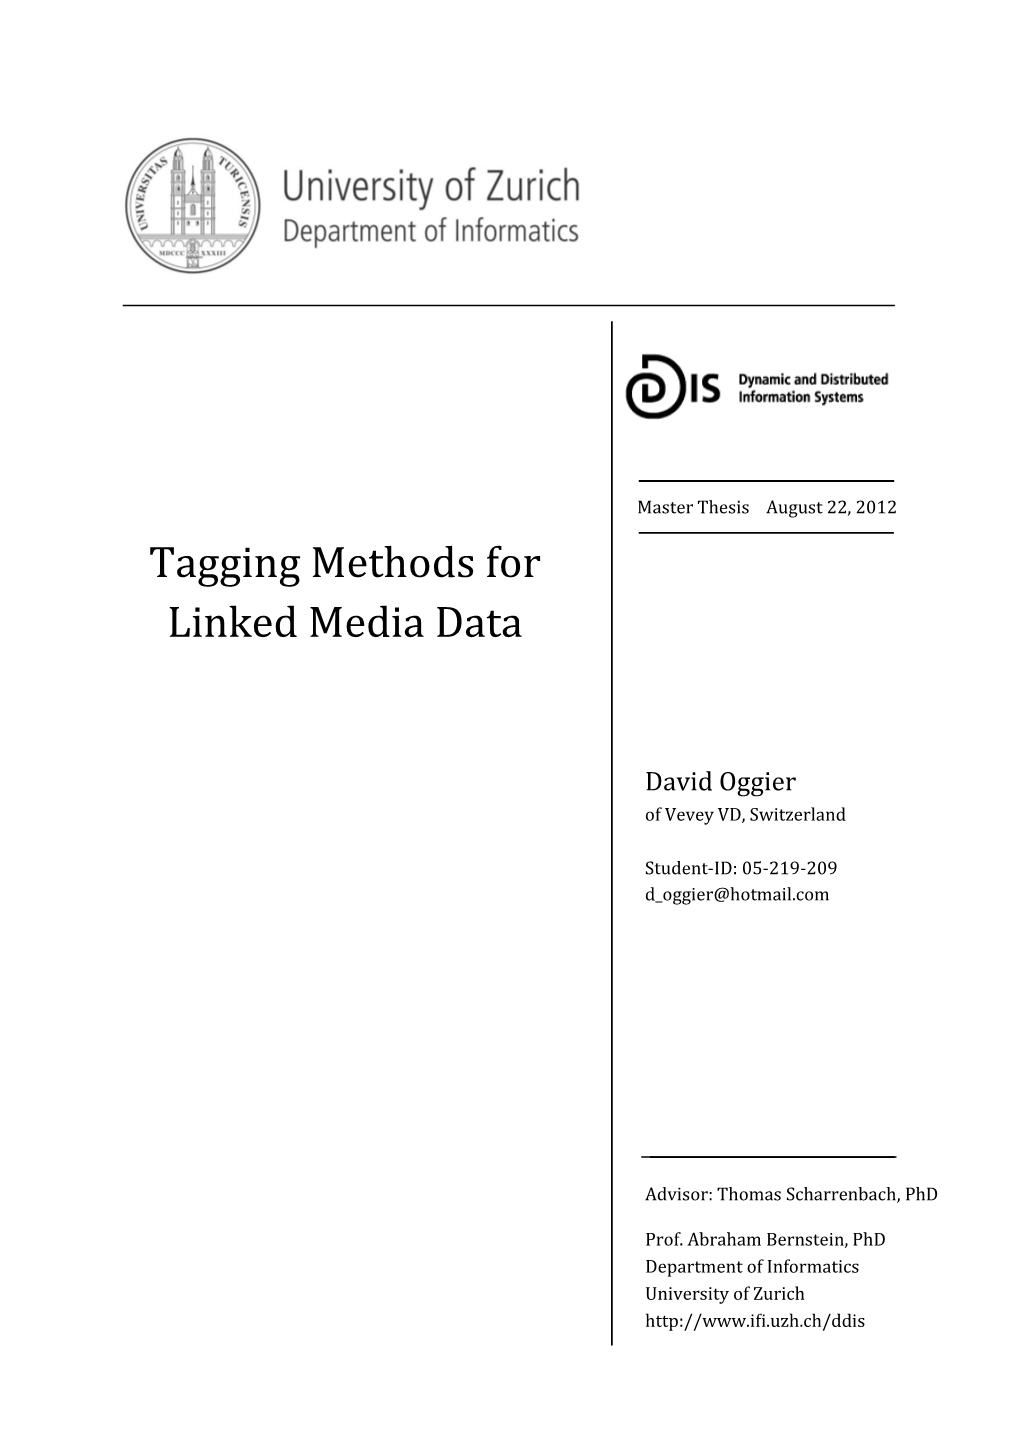 Tagging Methods for Linked Media Data